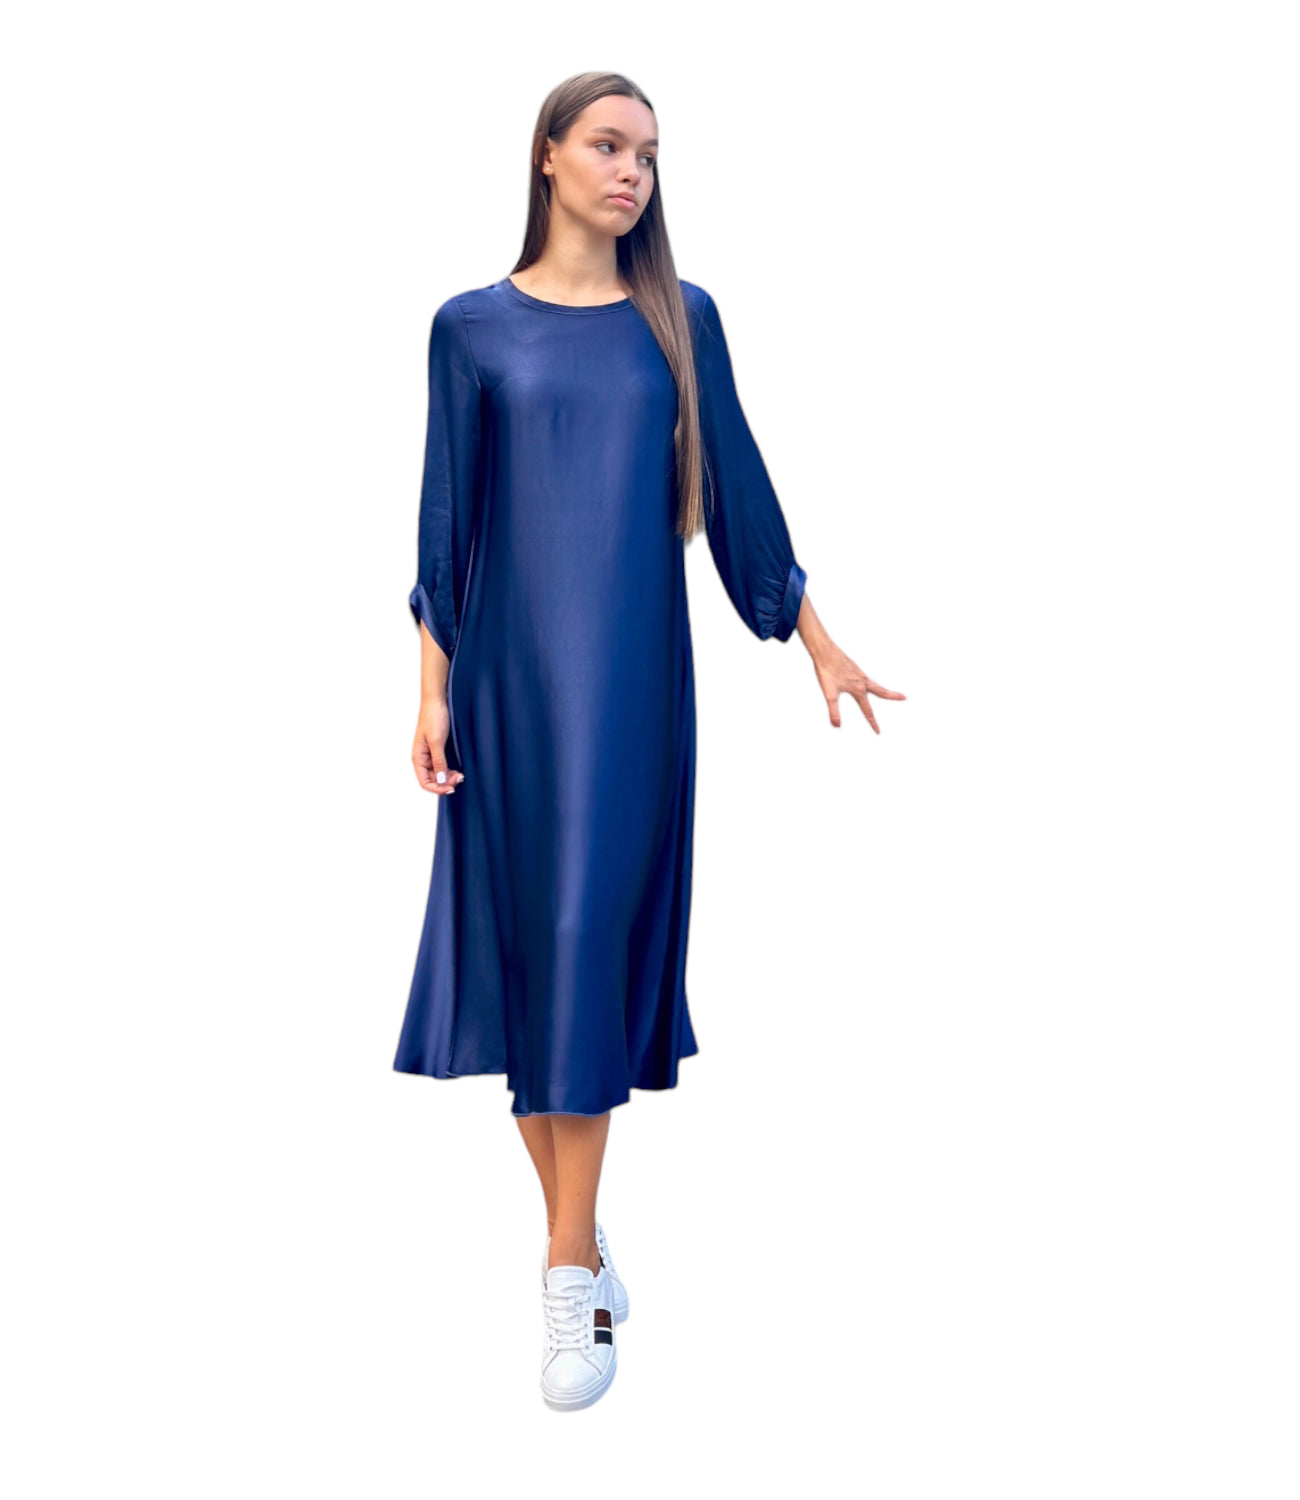 Dixie blue dress